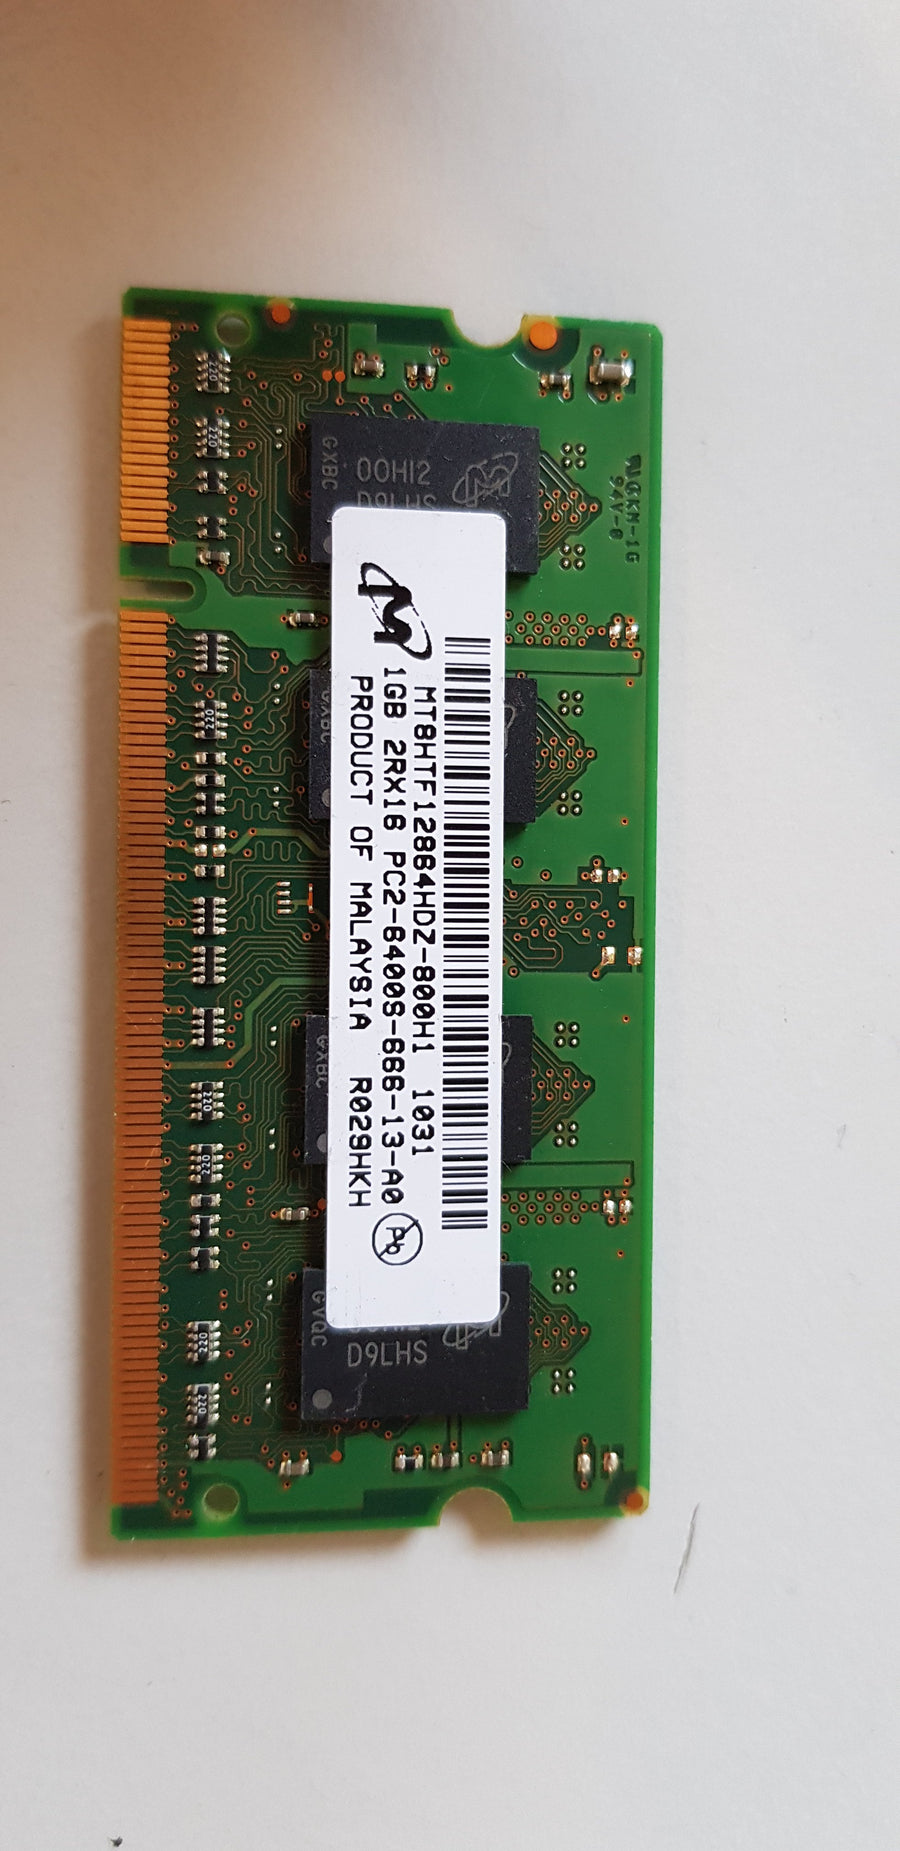 Micron 1GB 2Rx16 PC2-6400S 200Pin CL6 DDR2 SODIMM Memory Module (MT8HTF12864HDZ-800H1)